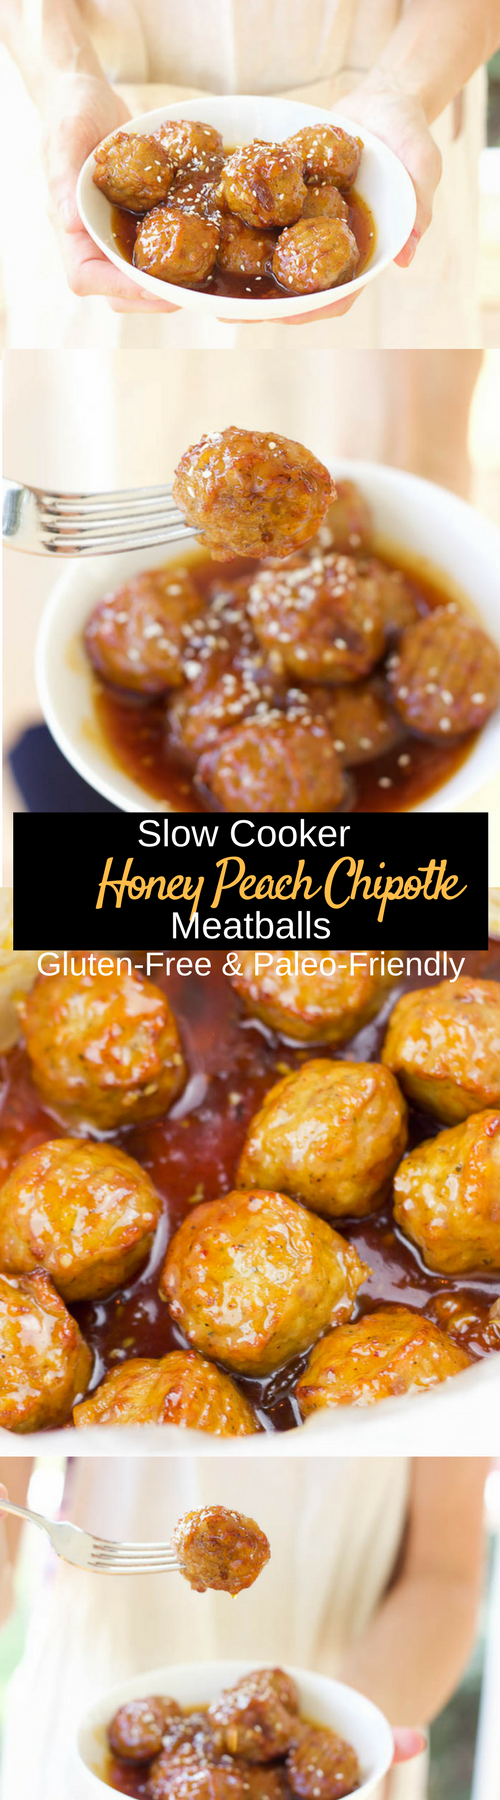 slow cooker honey peach chipotle meatballs gluten free paleo